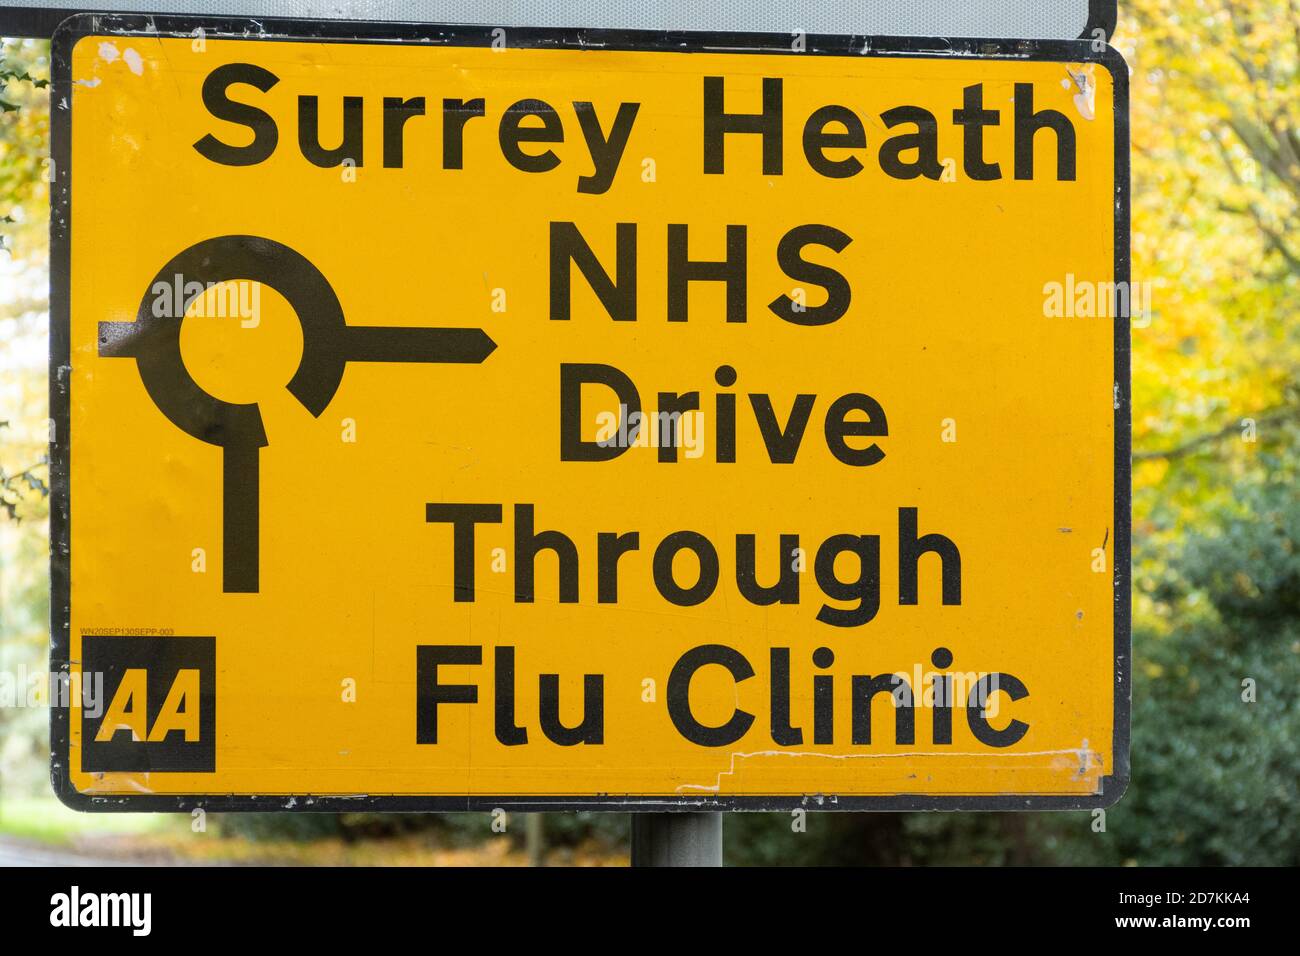 Road sign to an NHS drive through flu clinic Proporcinal Influenza jabs vaccinations, Surrey, Reino Unido Foto de stock